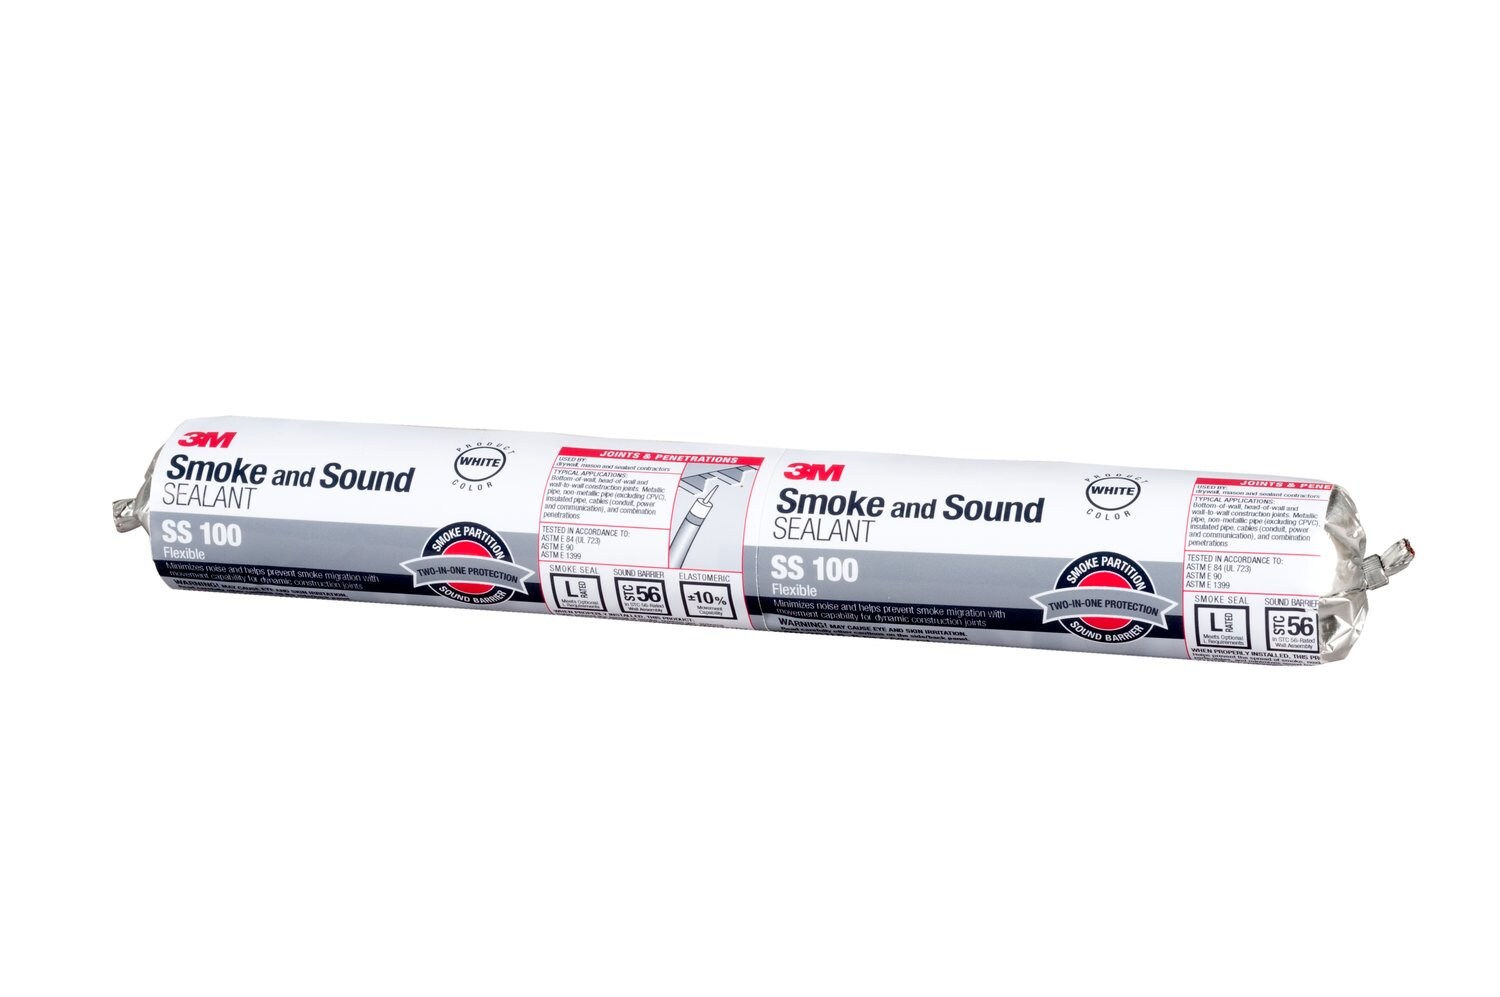 7100038650 - 3M Smoke and Sound Sealant SS 100, White, 20 fl oz Sausage Pack,
12/Case